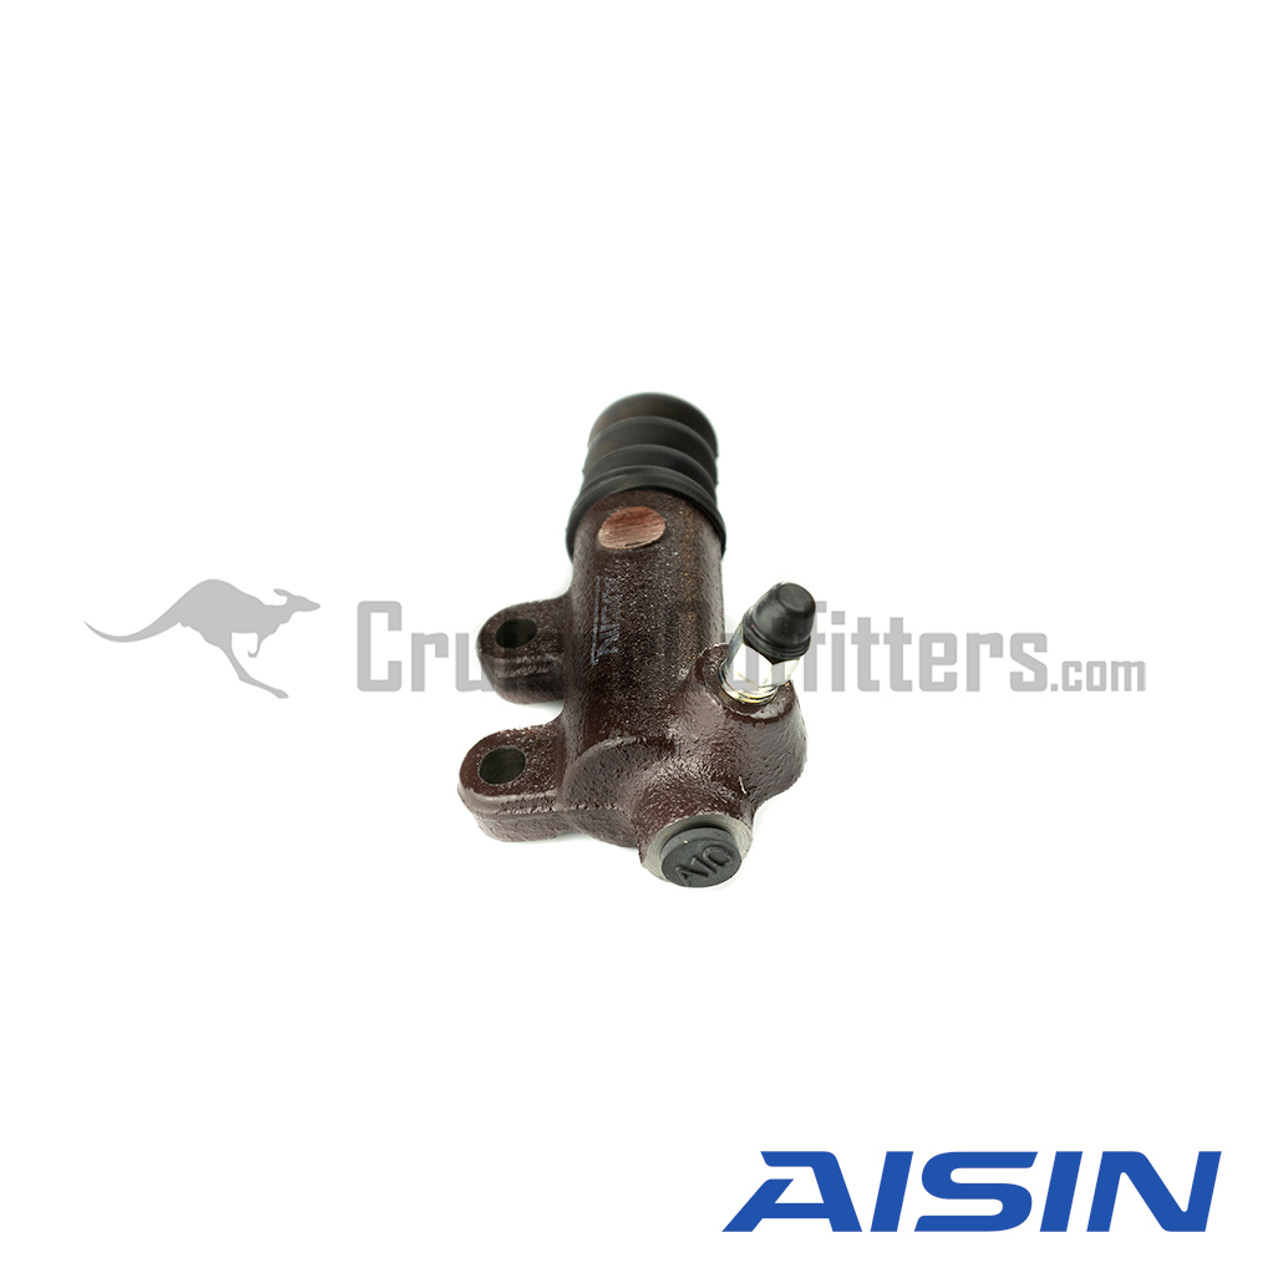 Clutch Slave Cylinder - AISIN - Fits RJ70/77 & Pickup / 4Runner (CSN30260N)